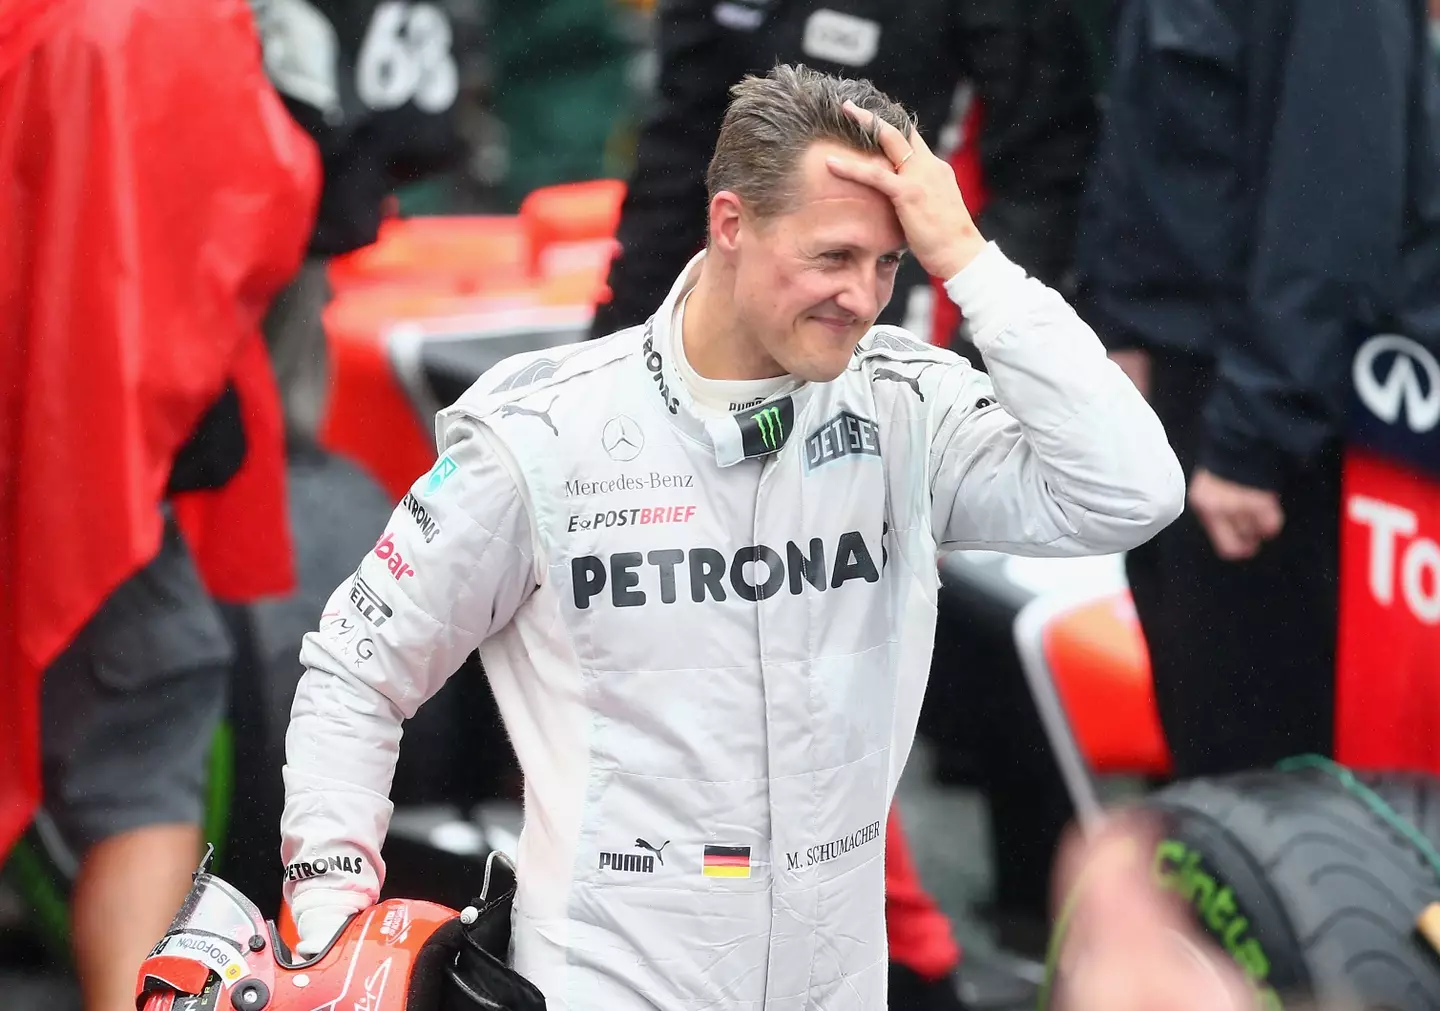 Michael Schumacher enjoyed an illustrious career in Formula One.